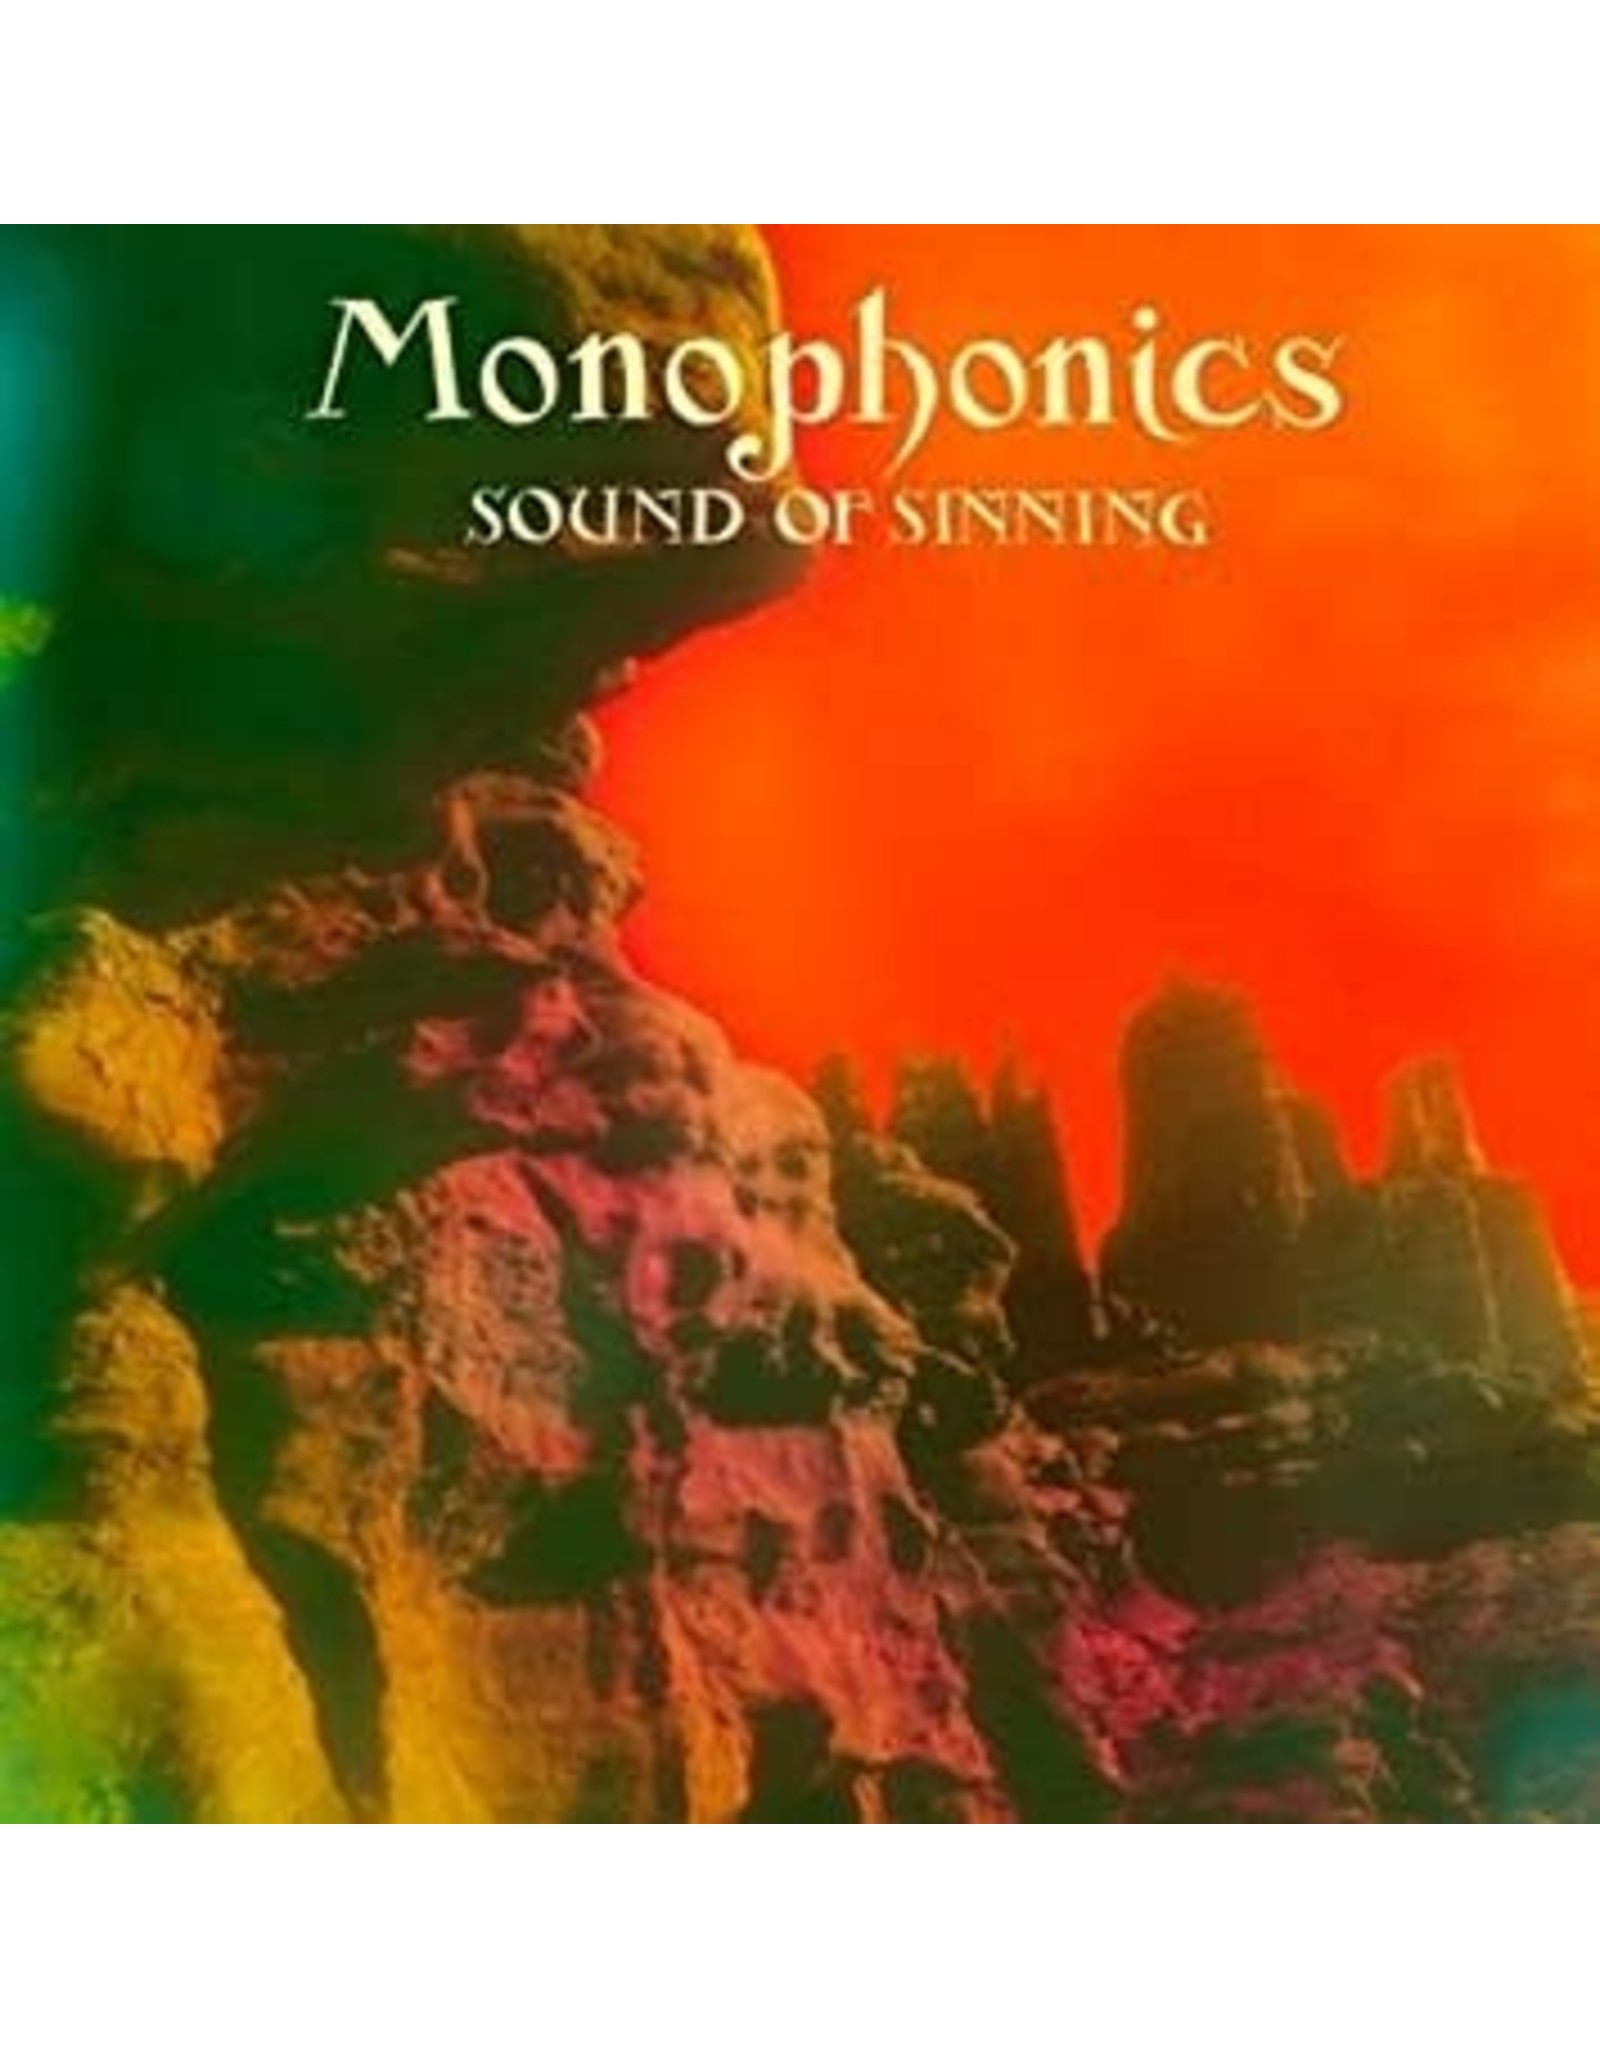 New Vinyl Monophonics - Sound of Sinning LP